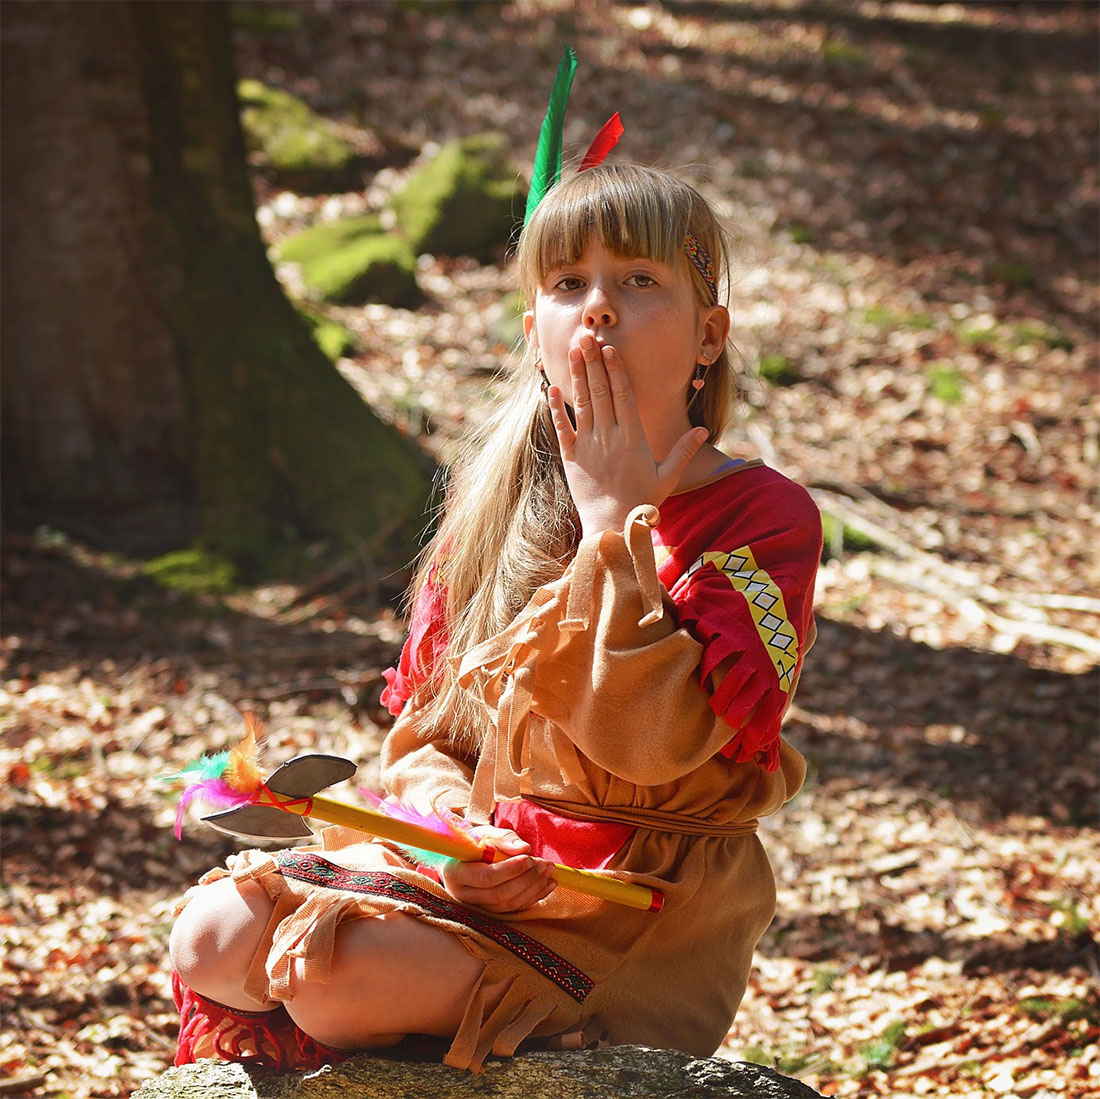 Child in a costume depicting a native American.